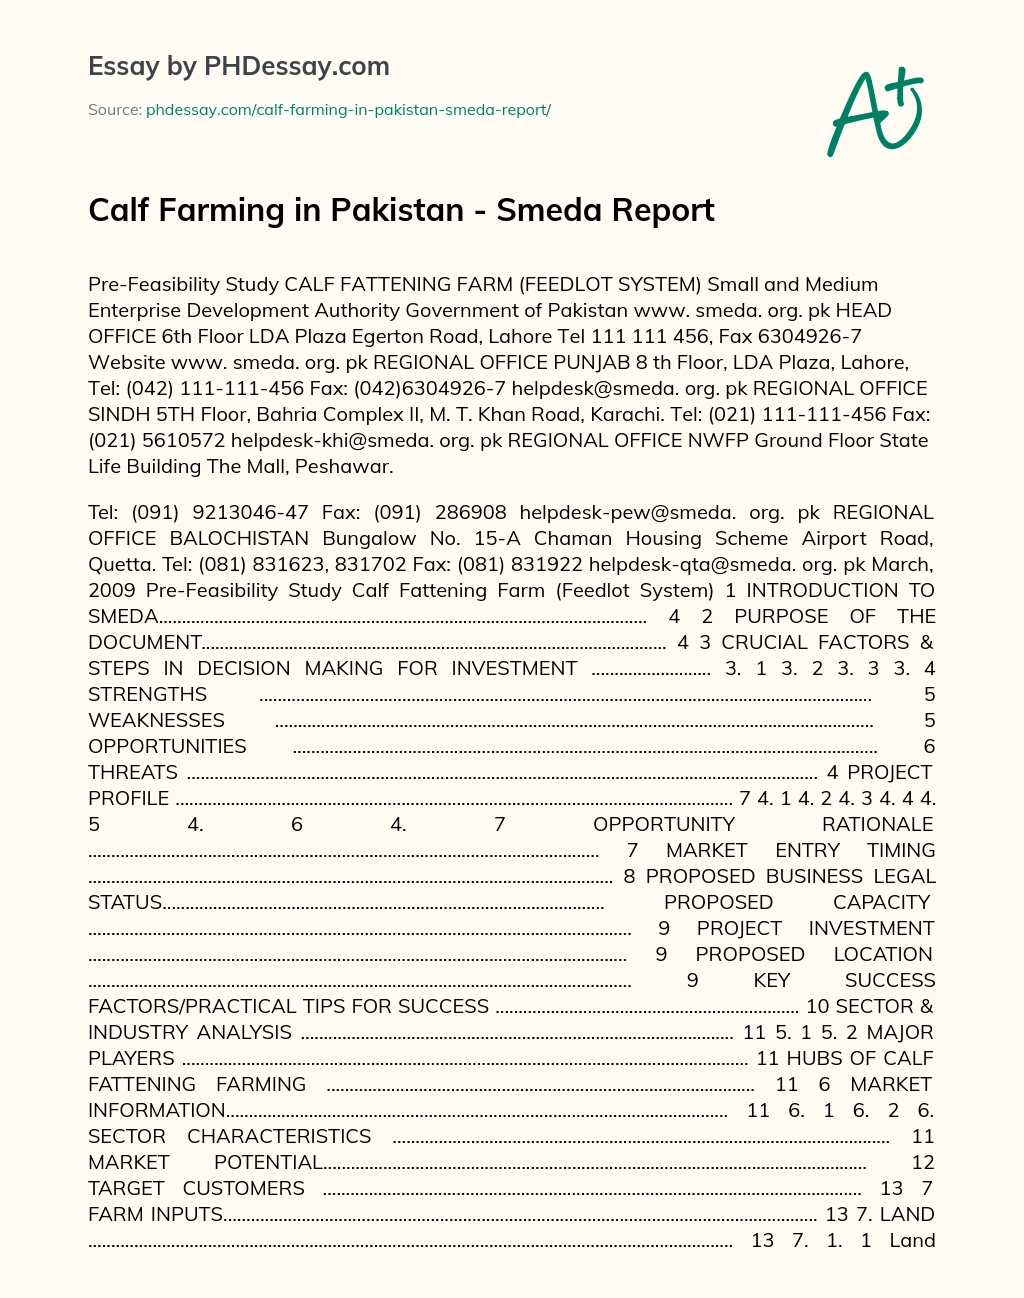 Calf Farming in Pakistan – SMEDA Report essay